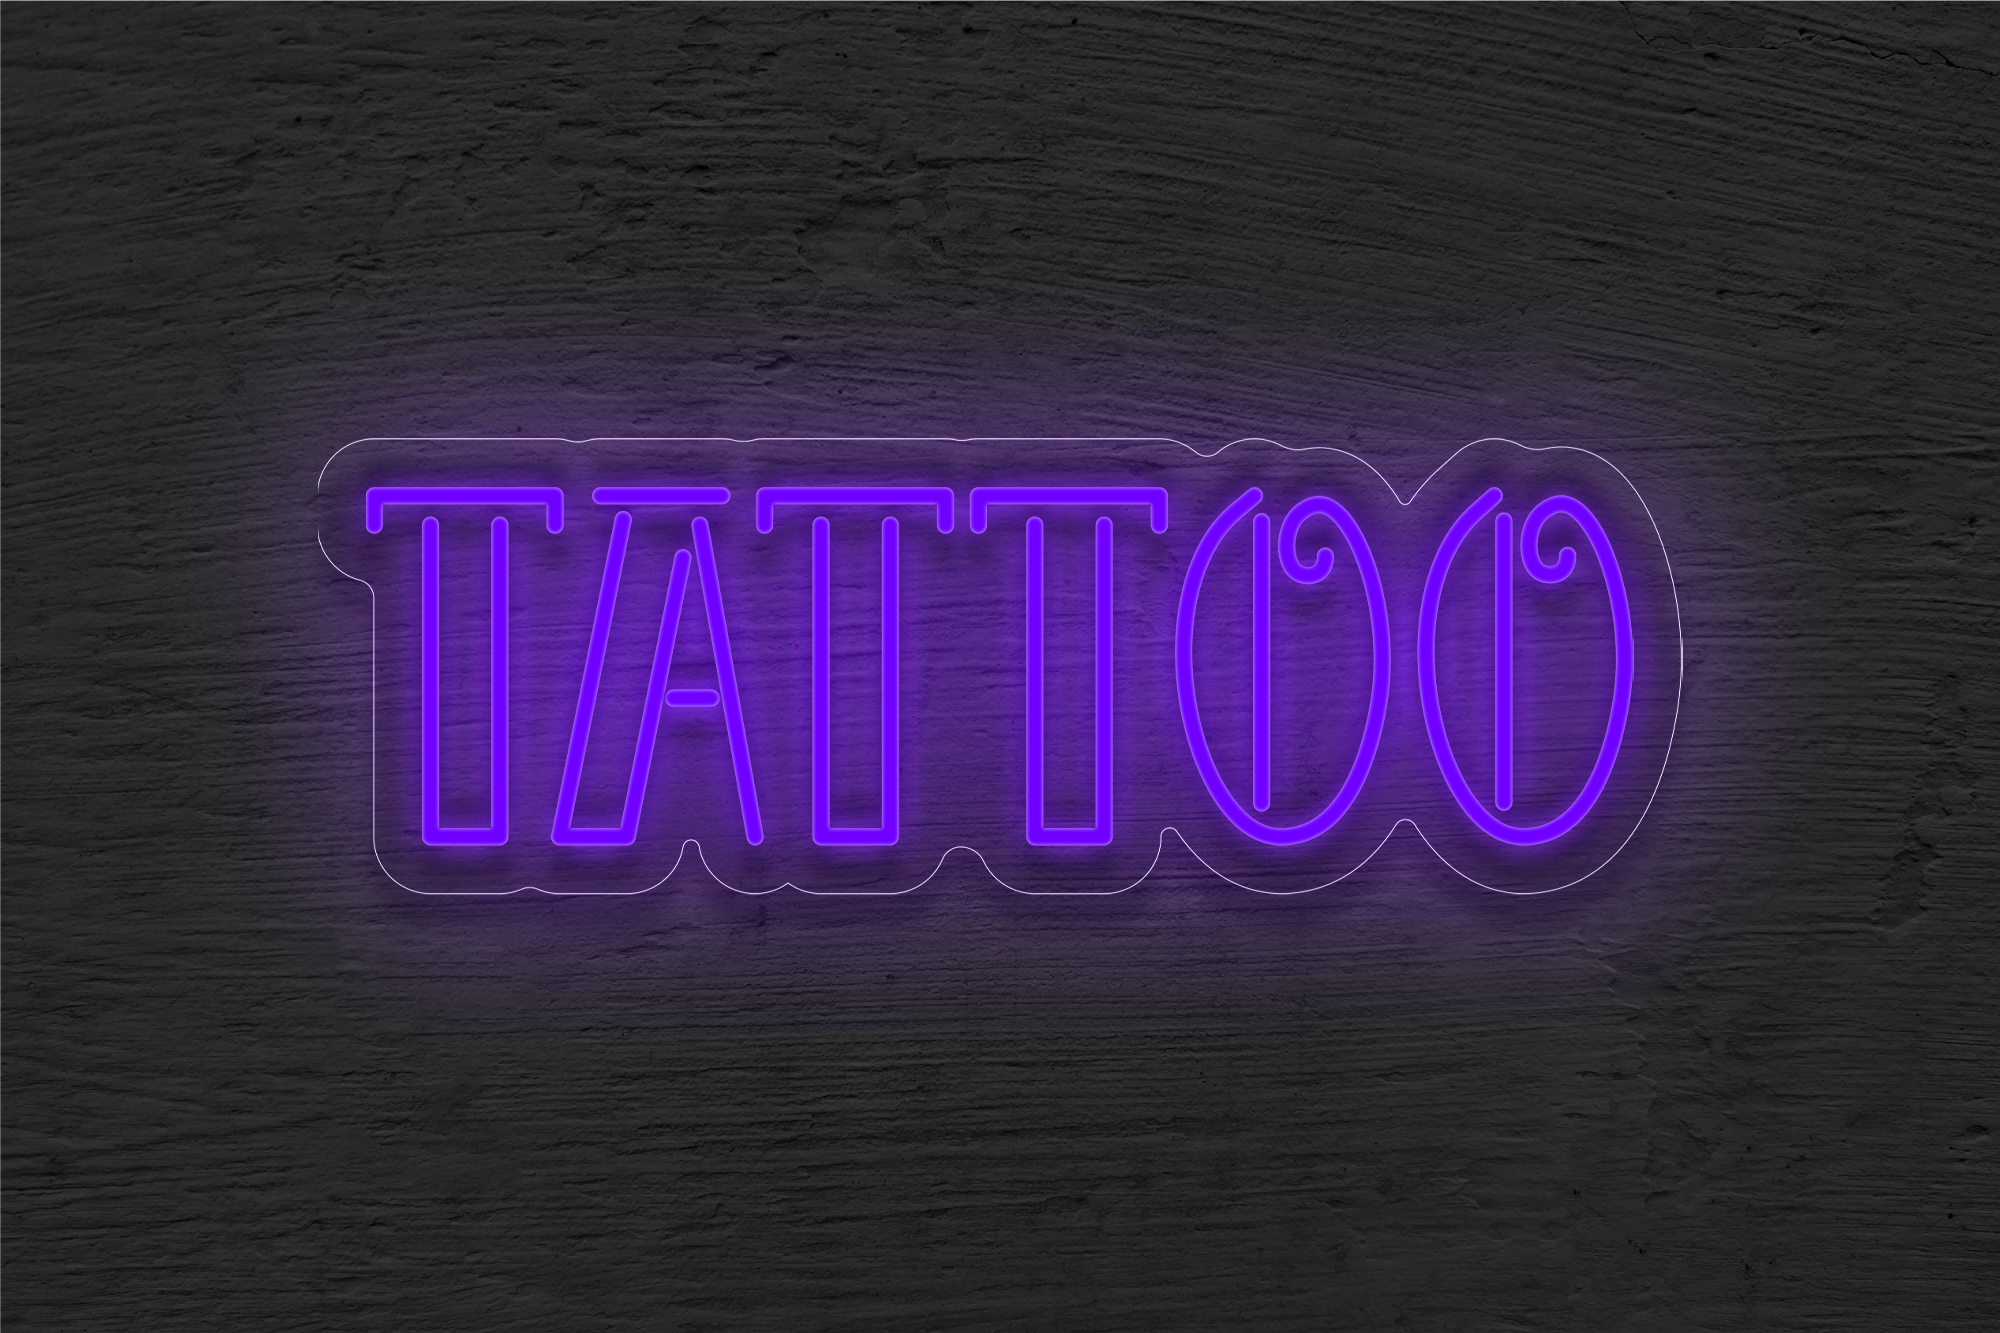 "Tattoo" LED Neon Sign